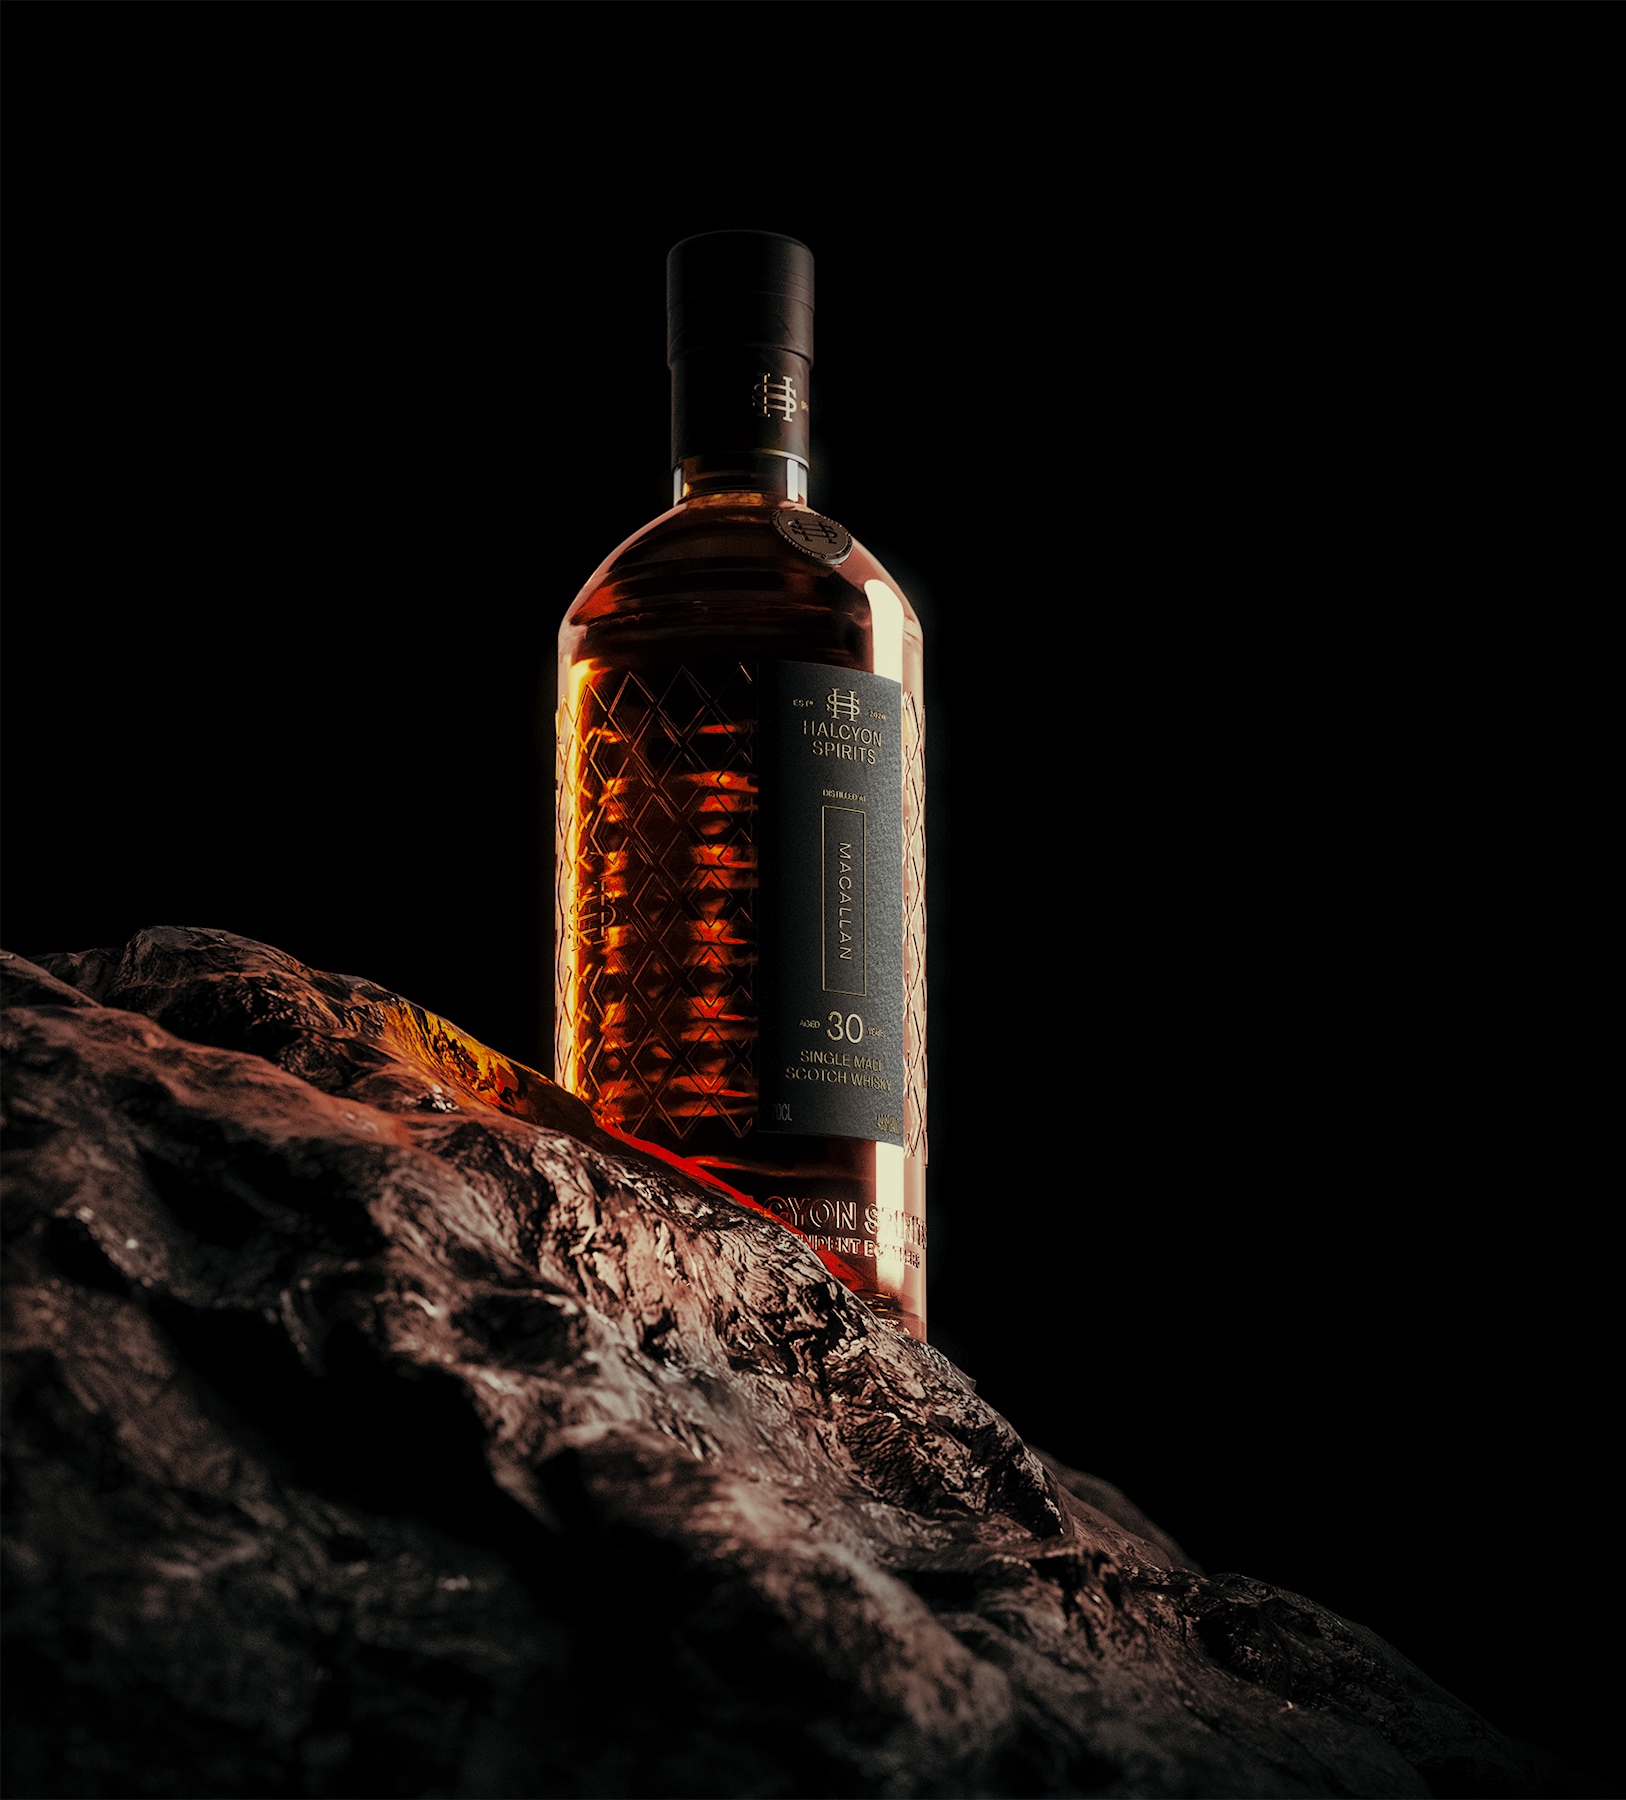 Halcyon Spirit – A Dark, Modern, and Minimalistic Expression of Rare Scotch Whisky Craftsmanship